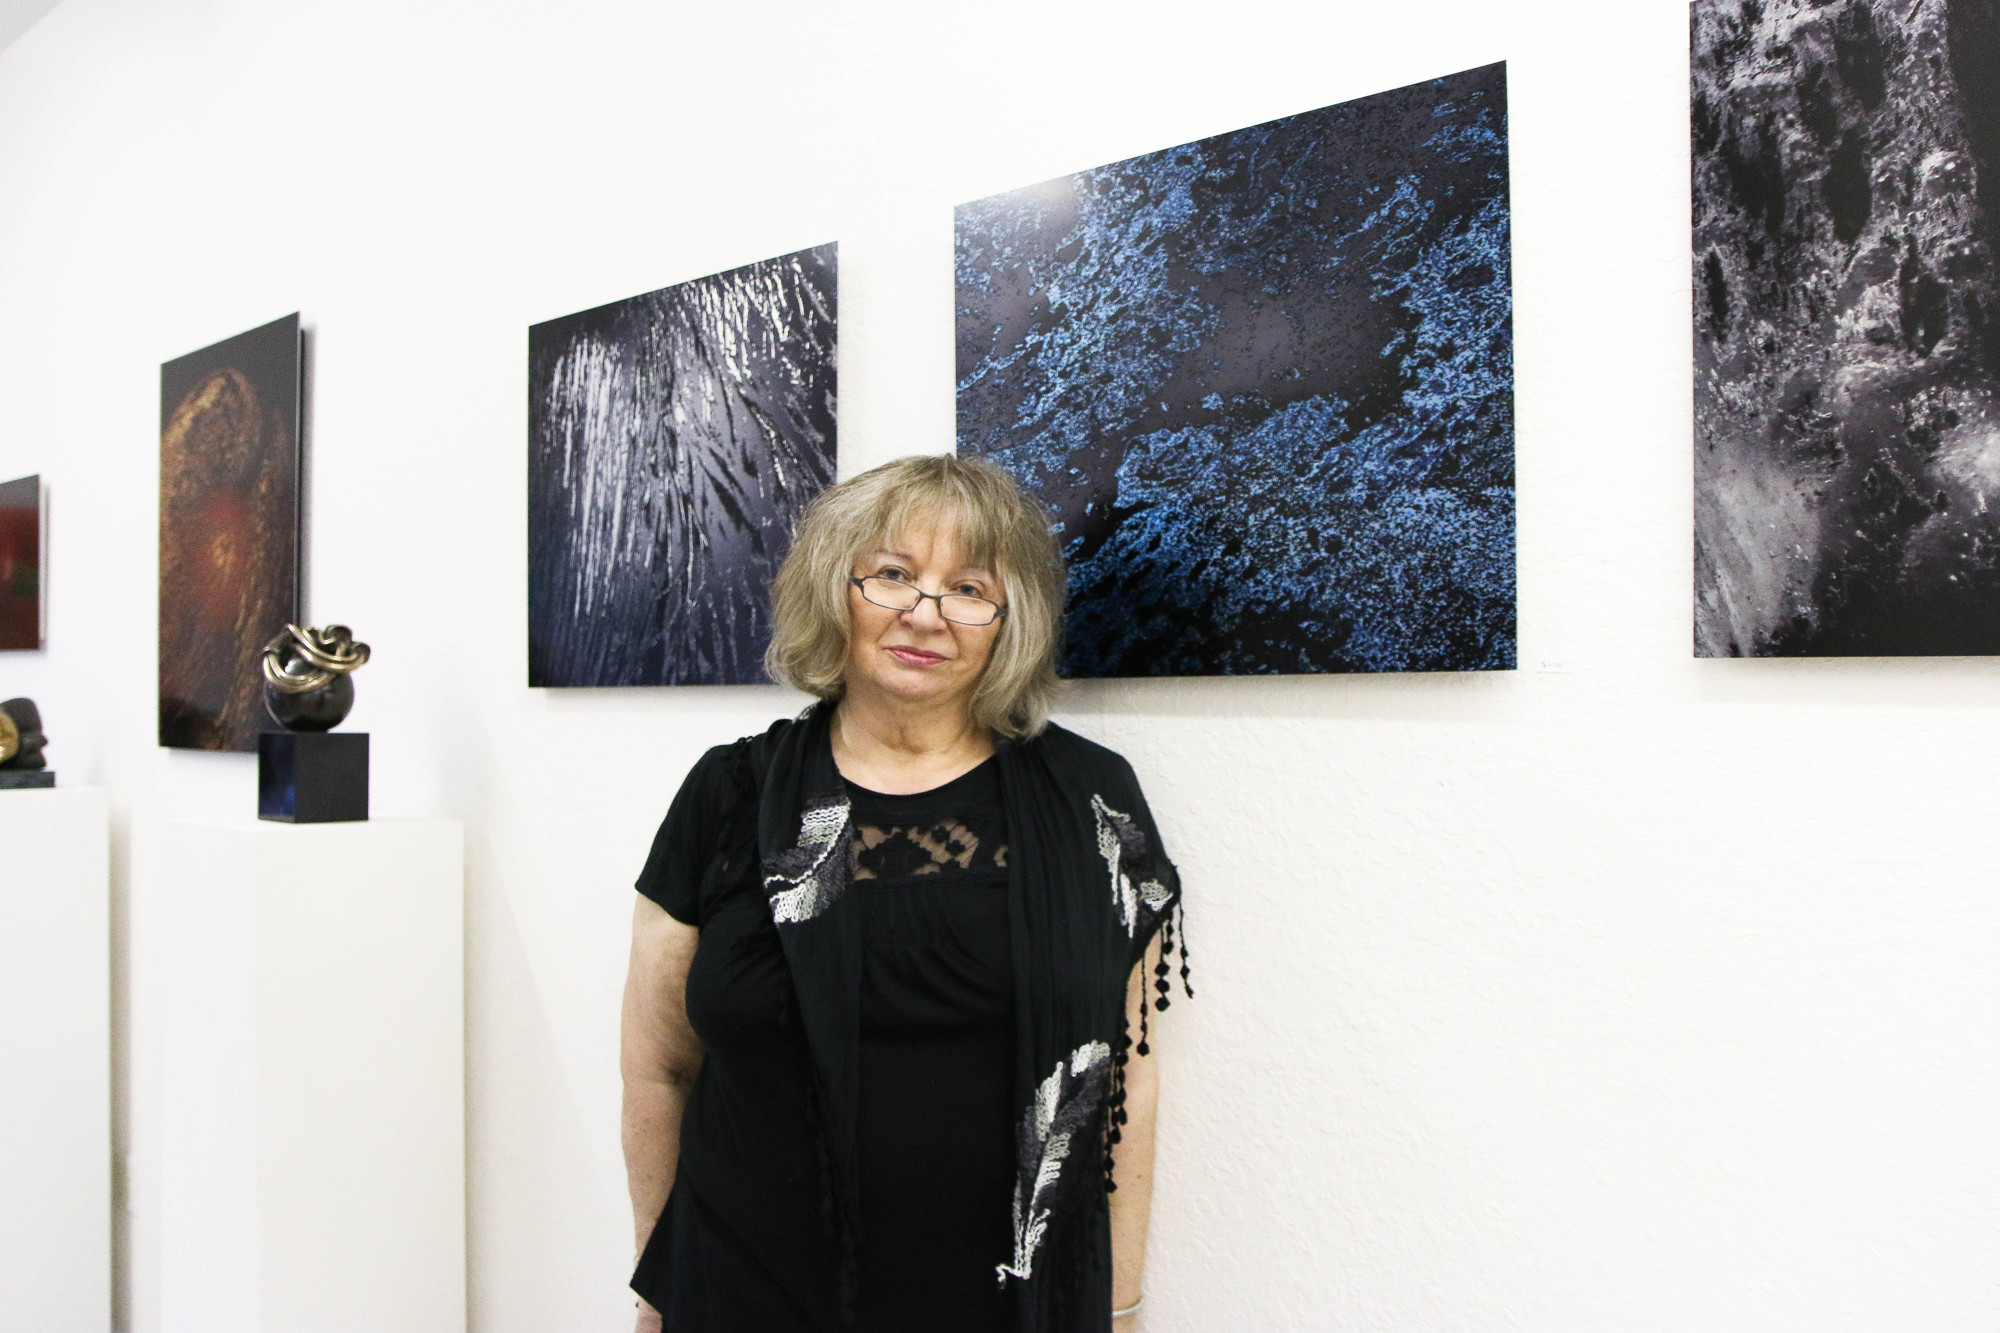 Artist Krystyna Spisak-Madejczyk poses in front of 